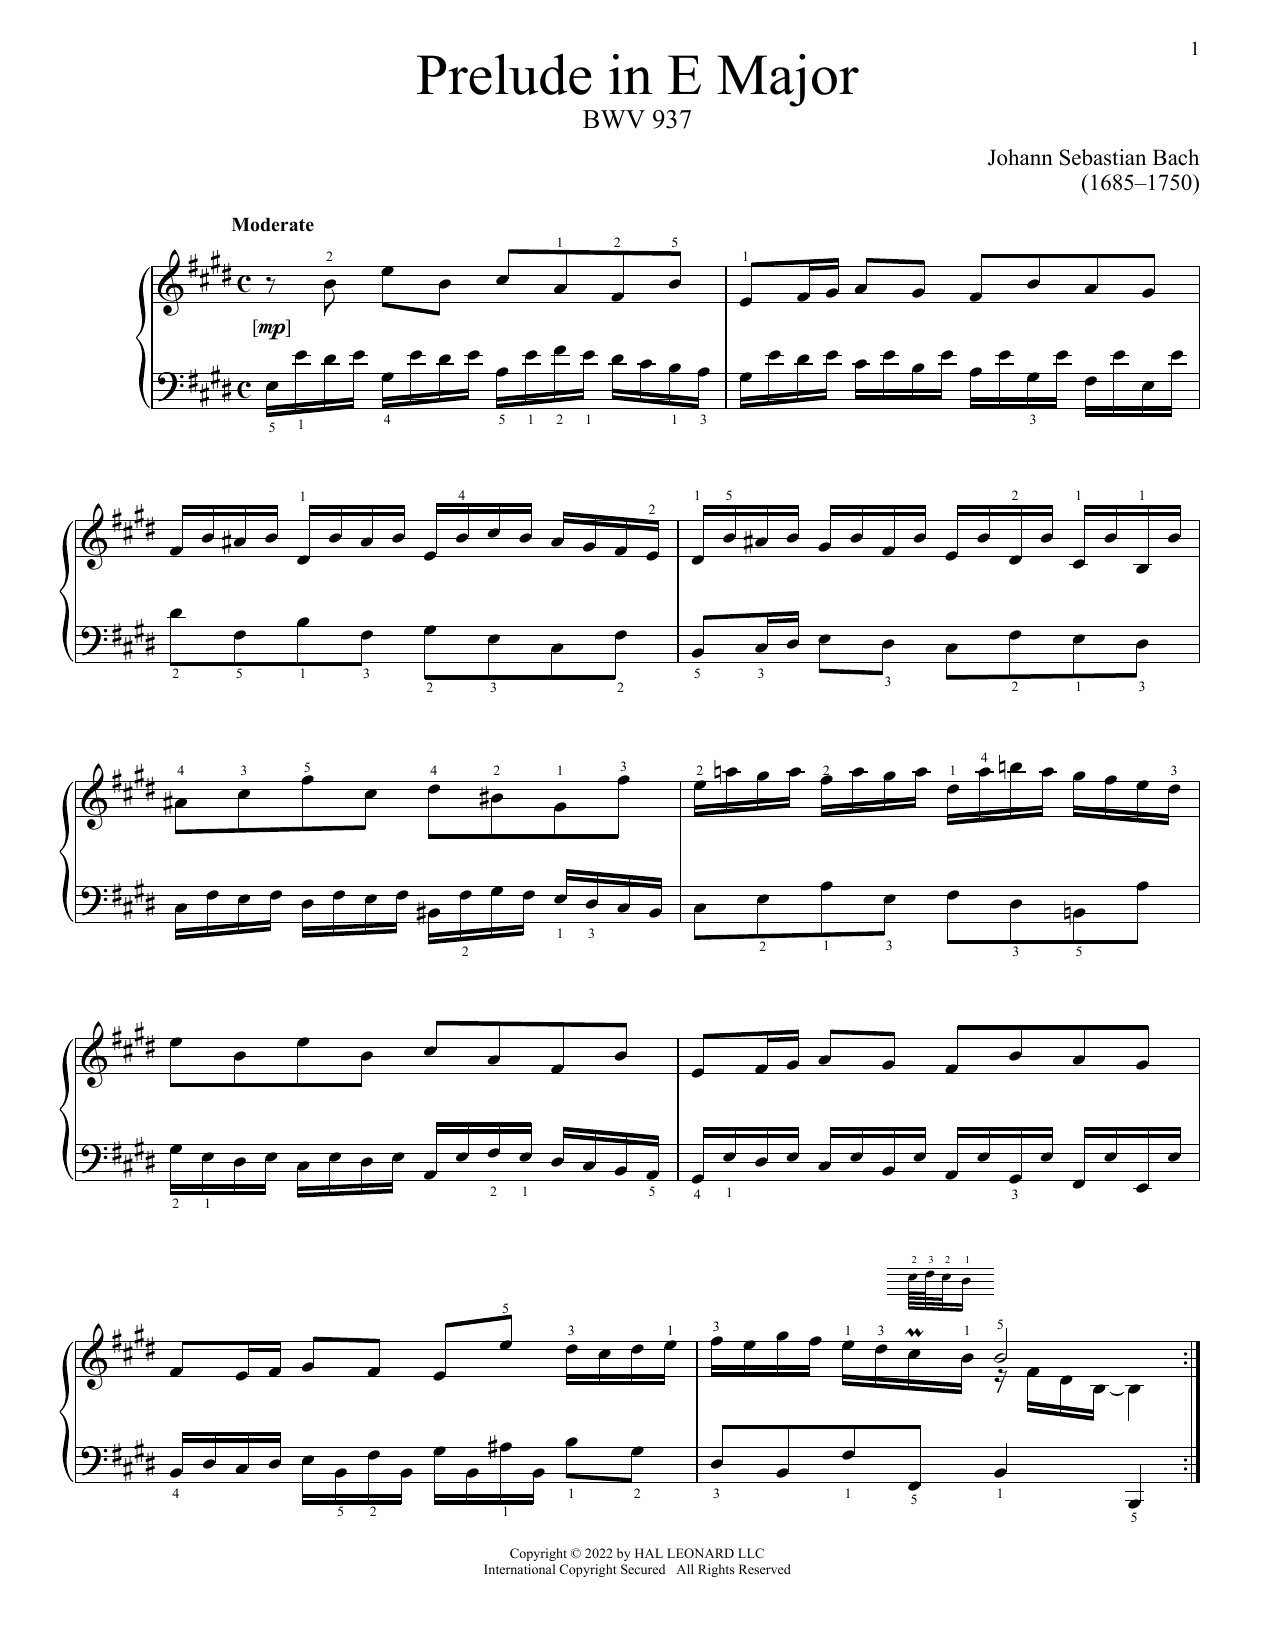 Johann Sebastian Bach Prelude In E Major, BWV 937 Sheet Music Notes & Chords for Piano Solo - Download or Print PDF